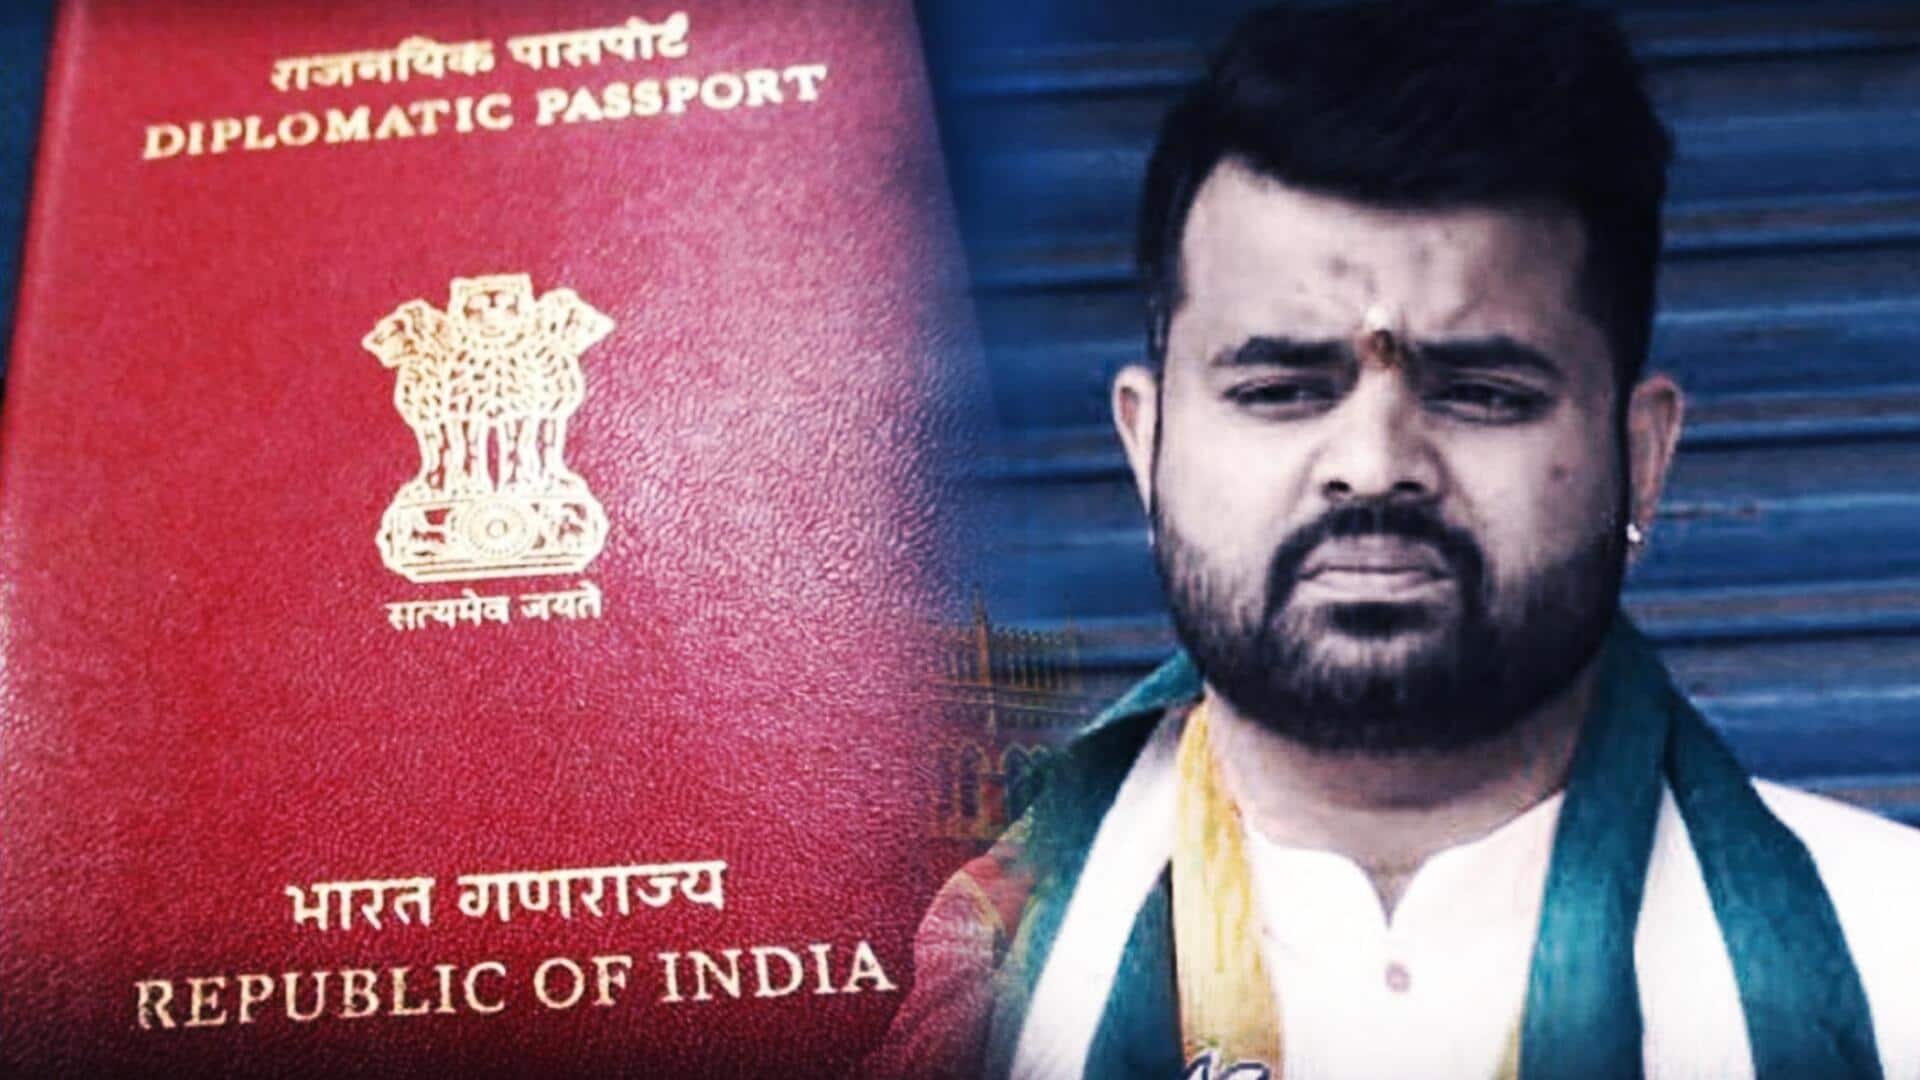 MEA processing request to revoke Prajwal Revanna's diplomatic passport: Report